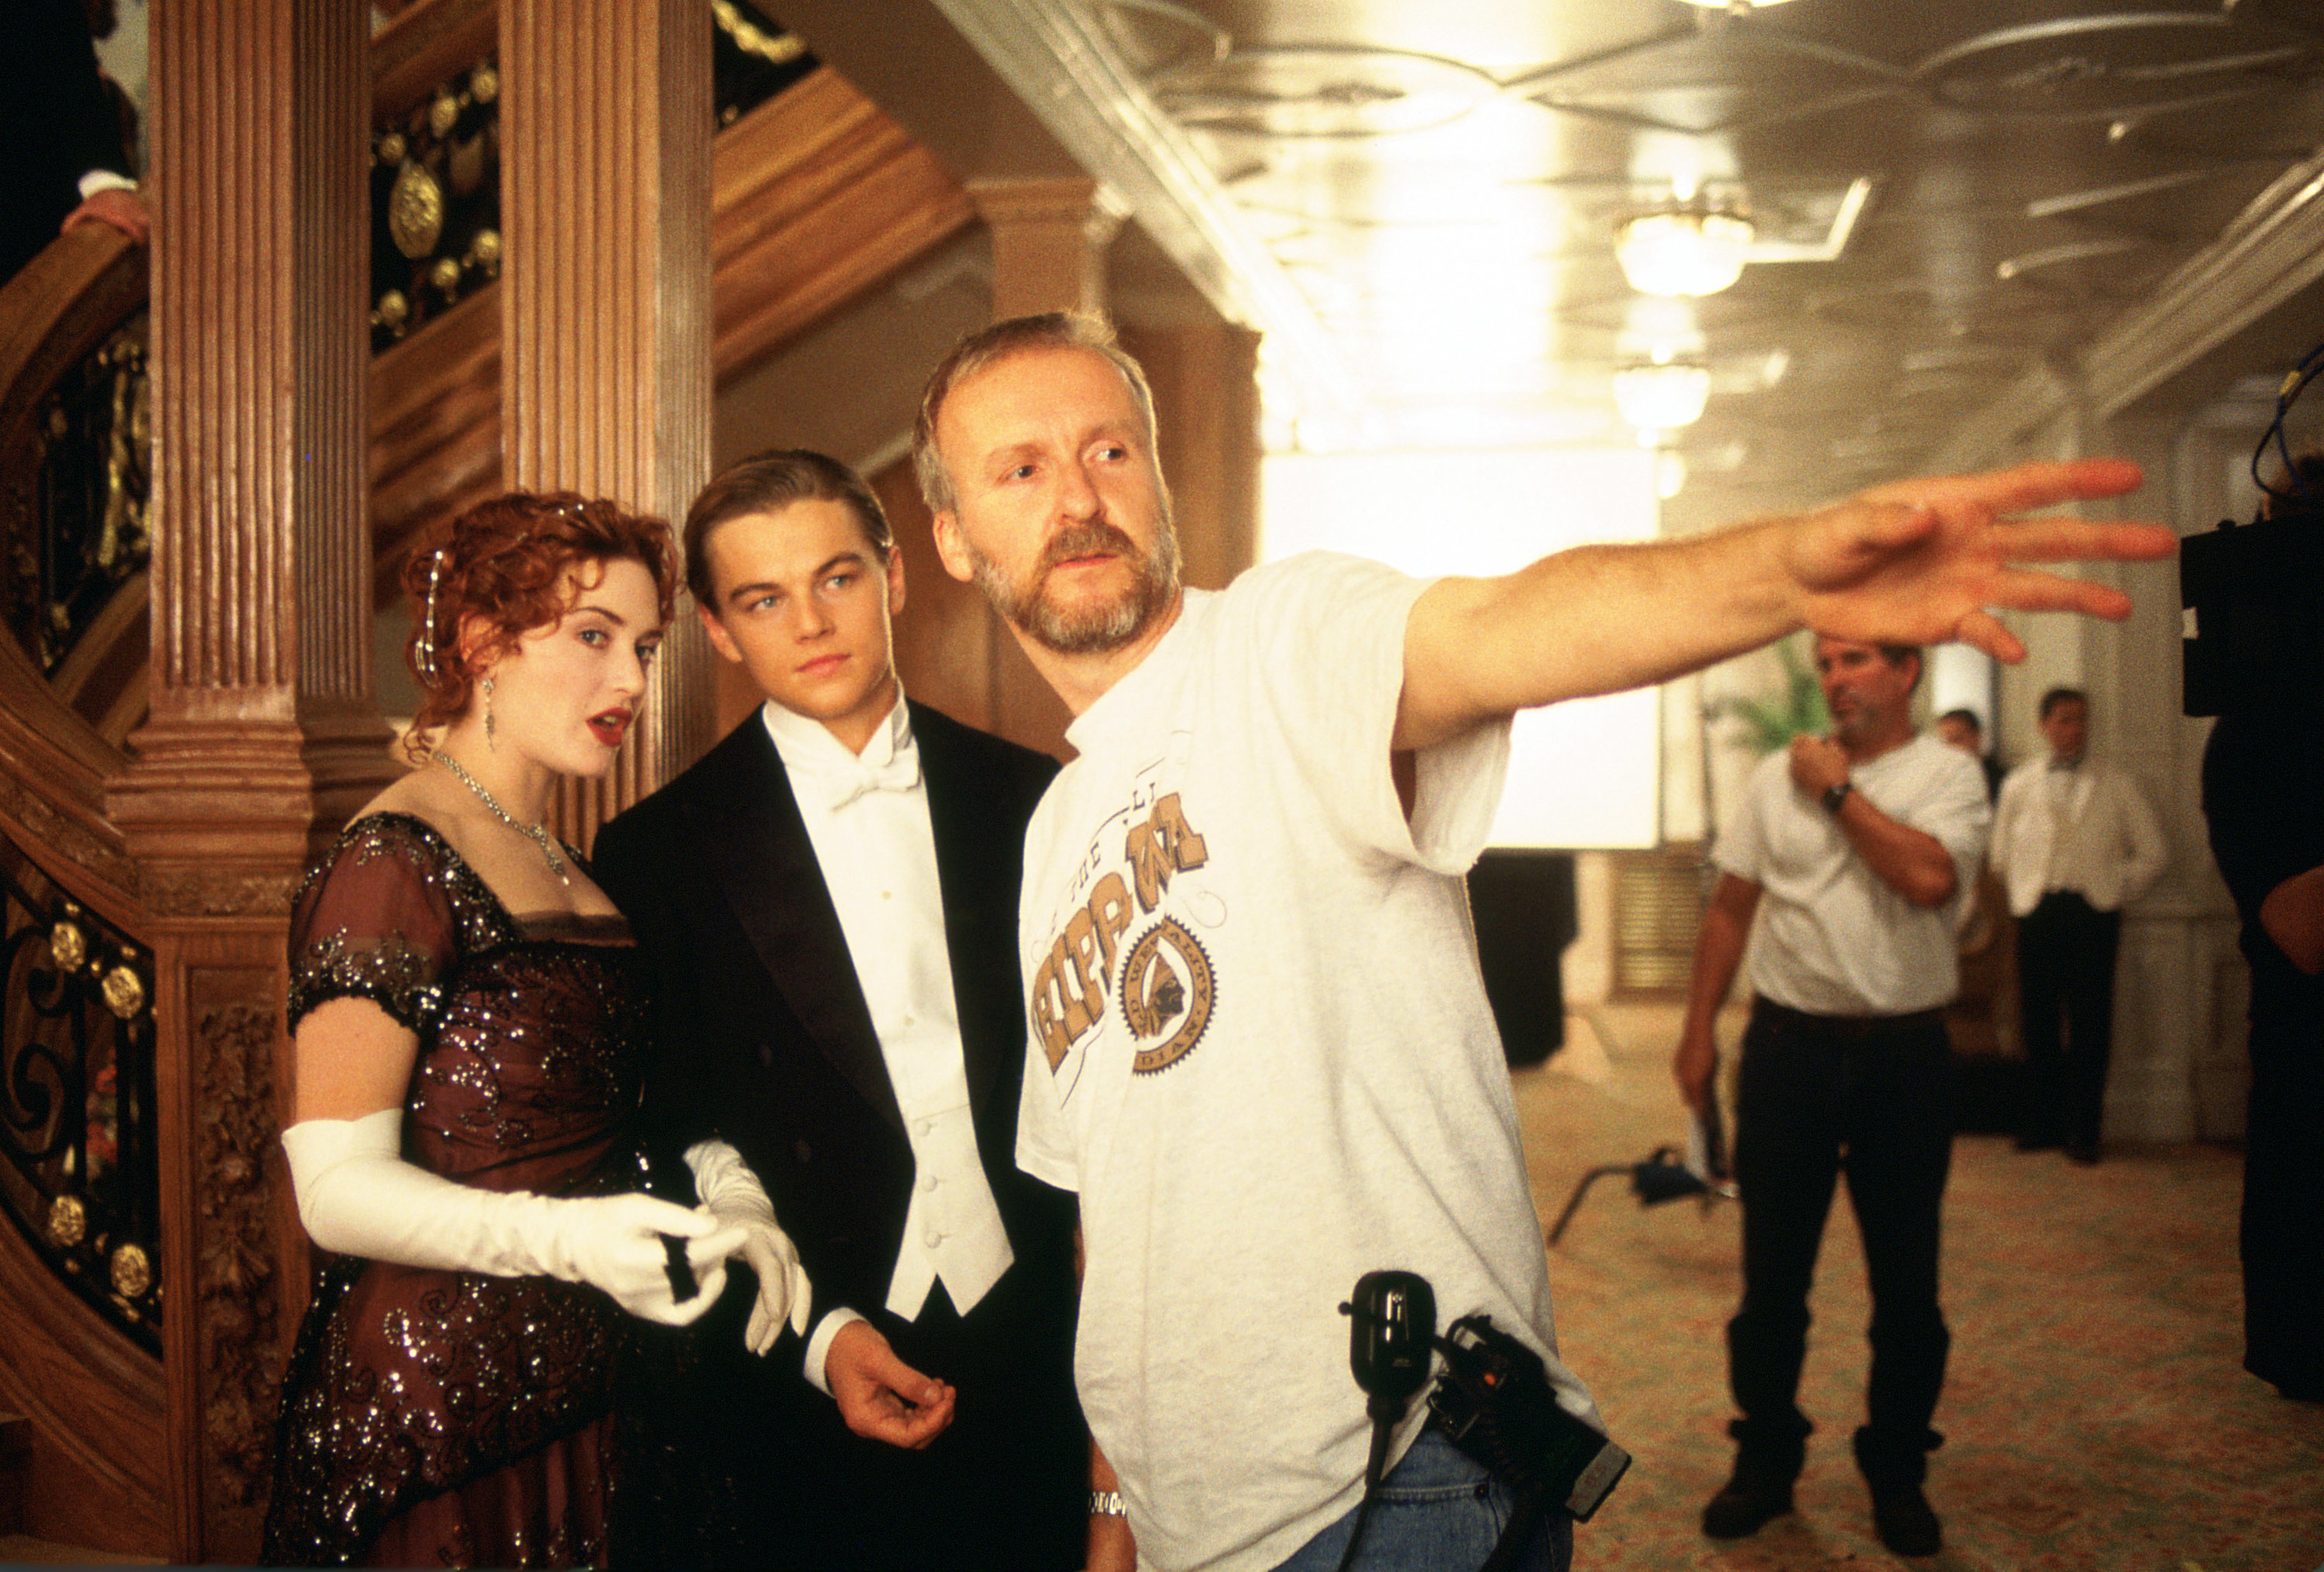 James Cameron directing Leonardo DiCaprio and Kate Winslet in a scene